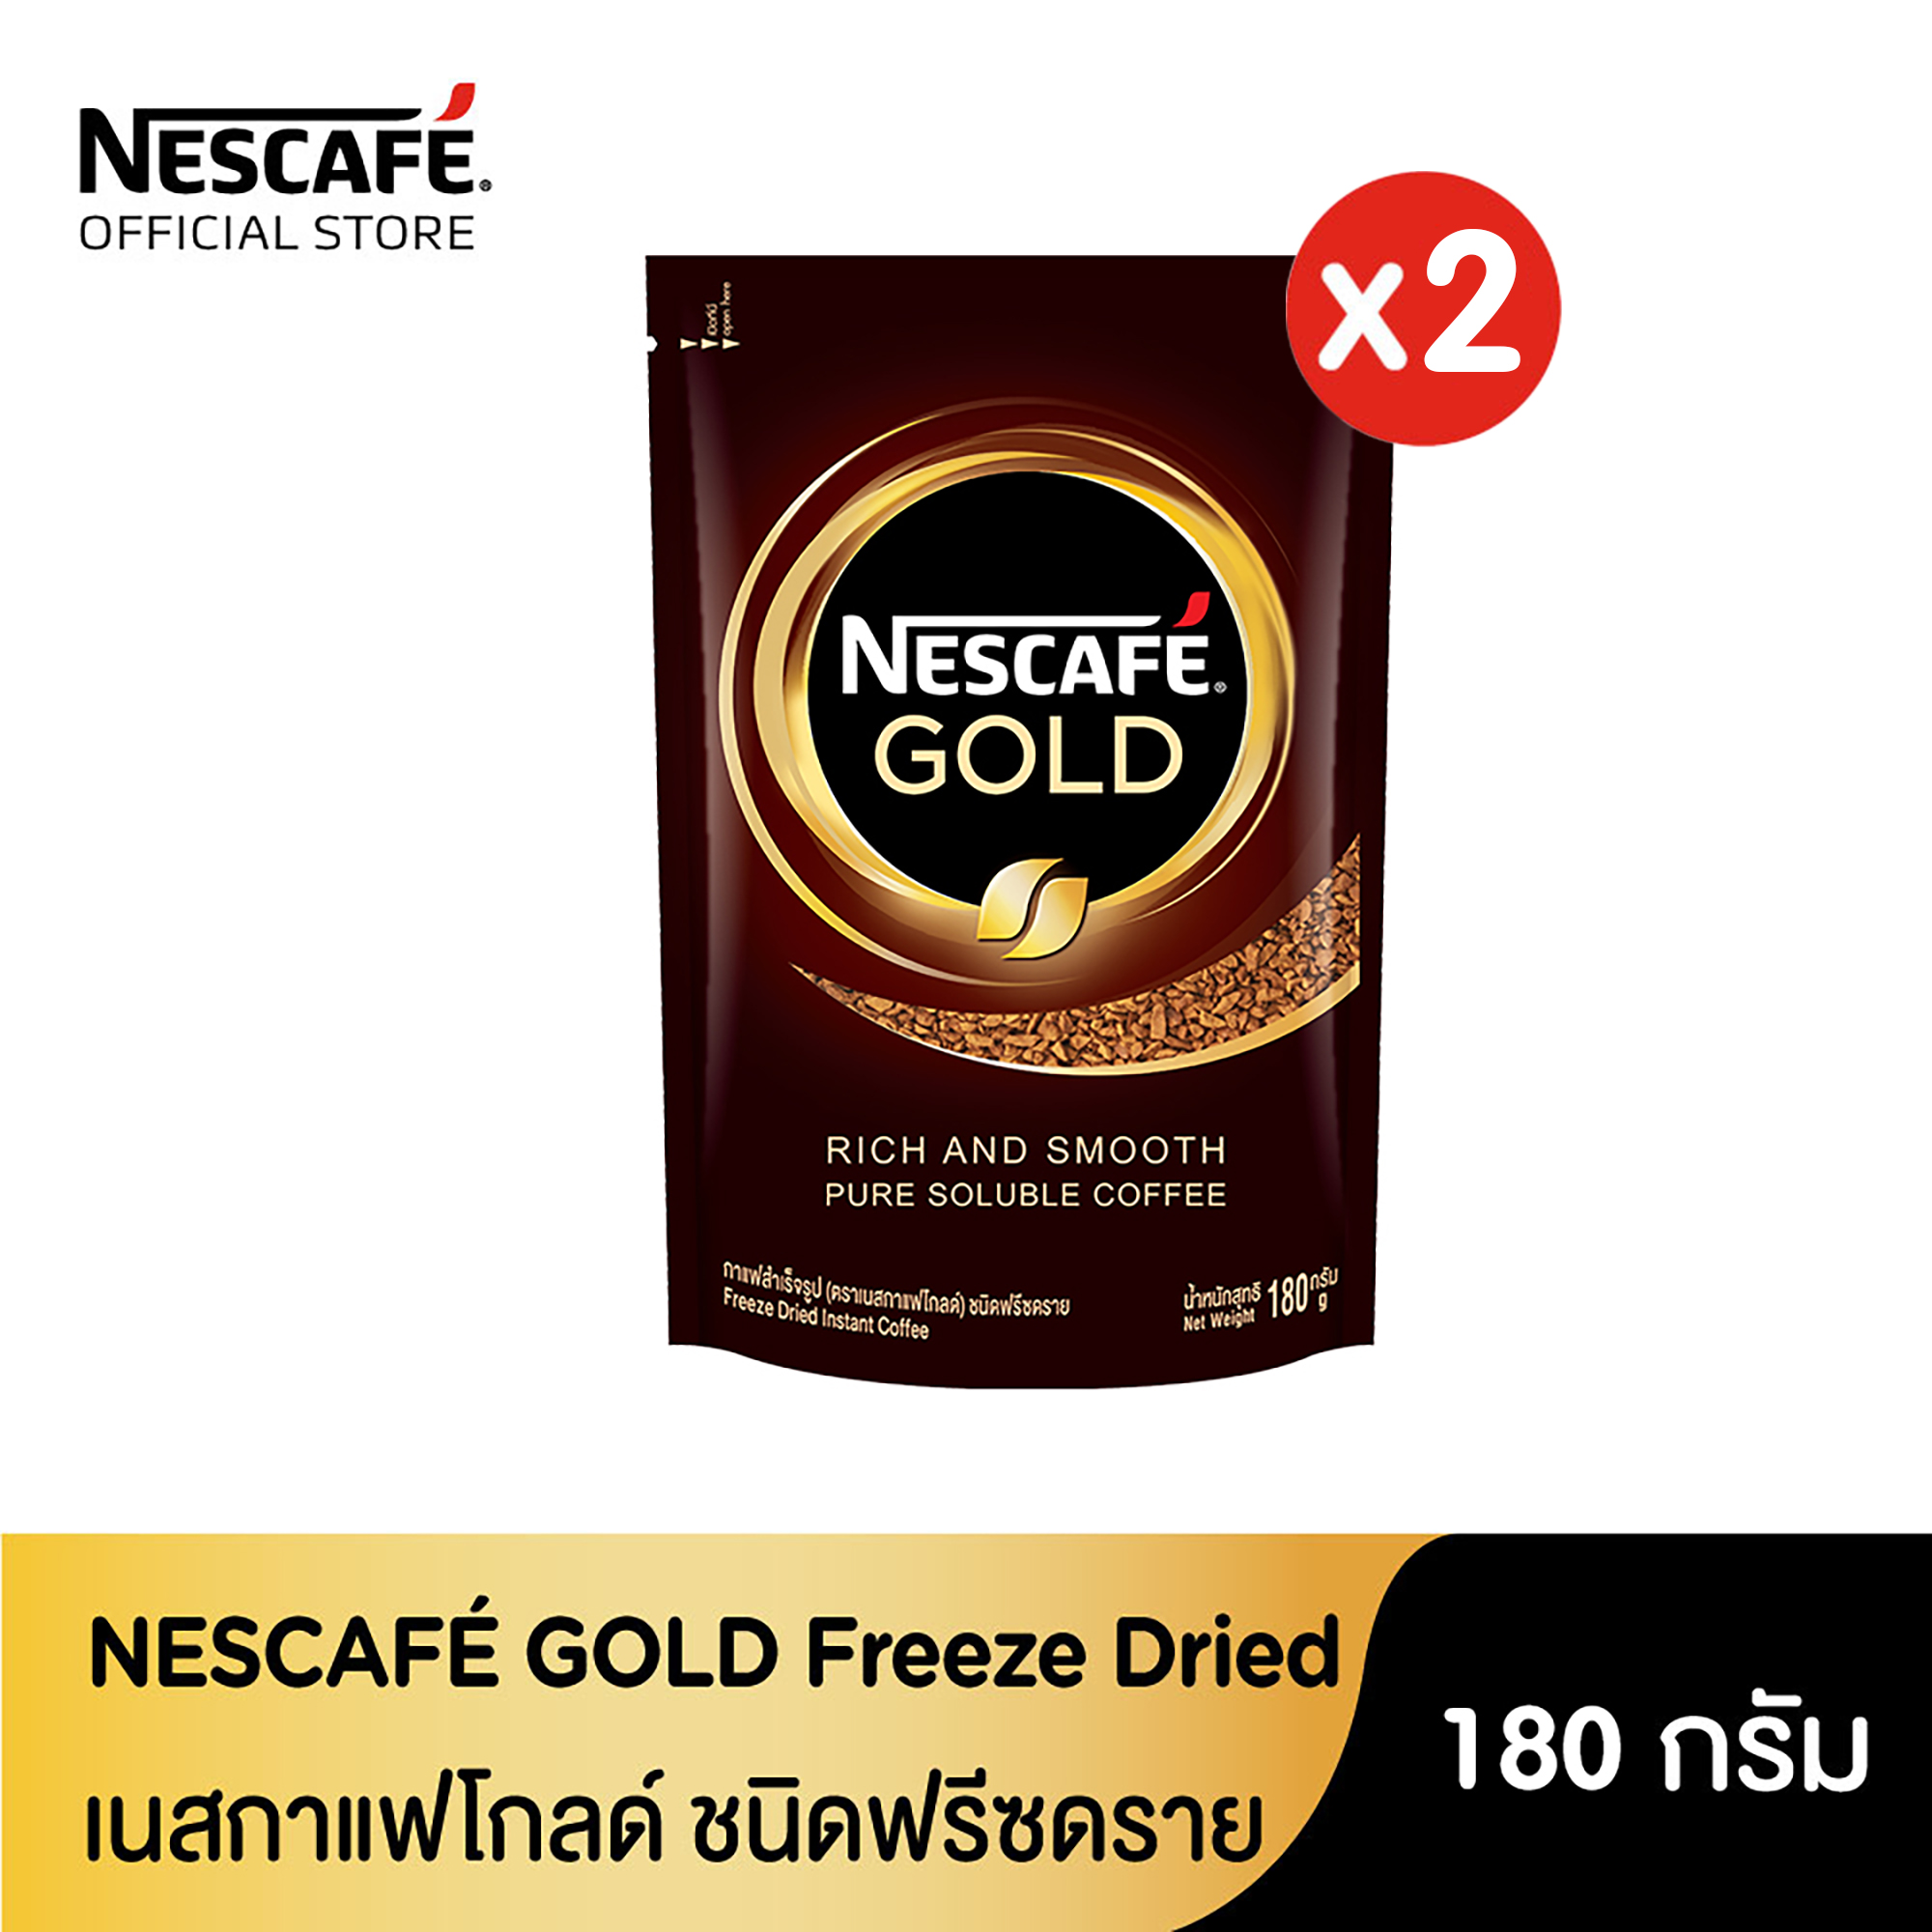 NESCAFE GOLD 180g เนสกาแฟโกลด์ ดอยแพค 180กรัม (2 แพ็ค)